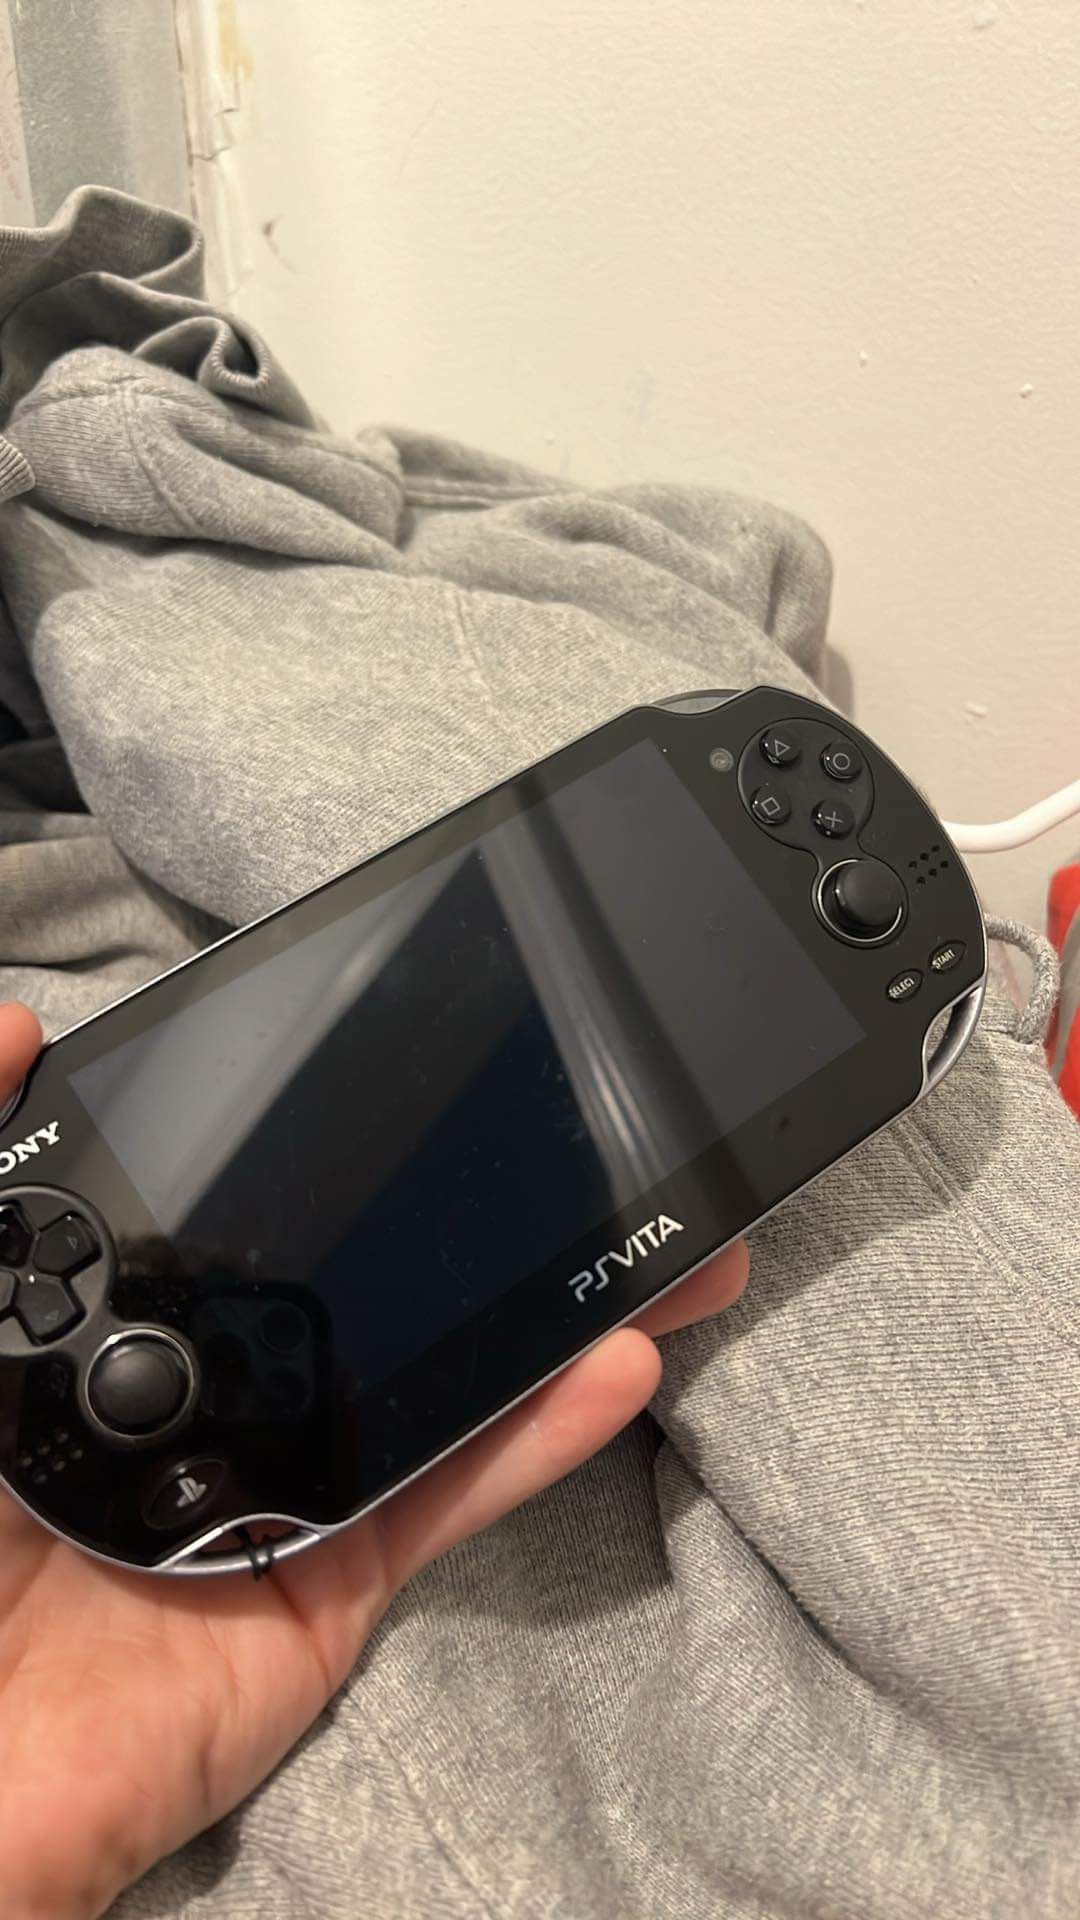 Modded PlayStation Vita 